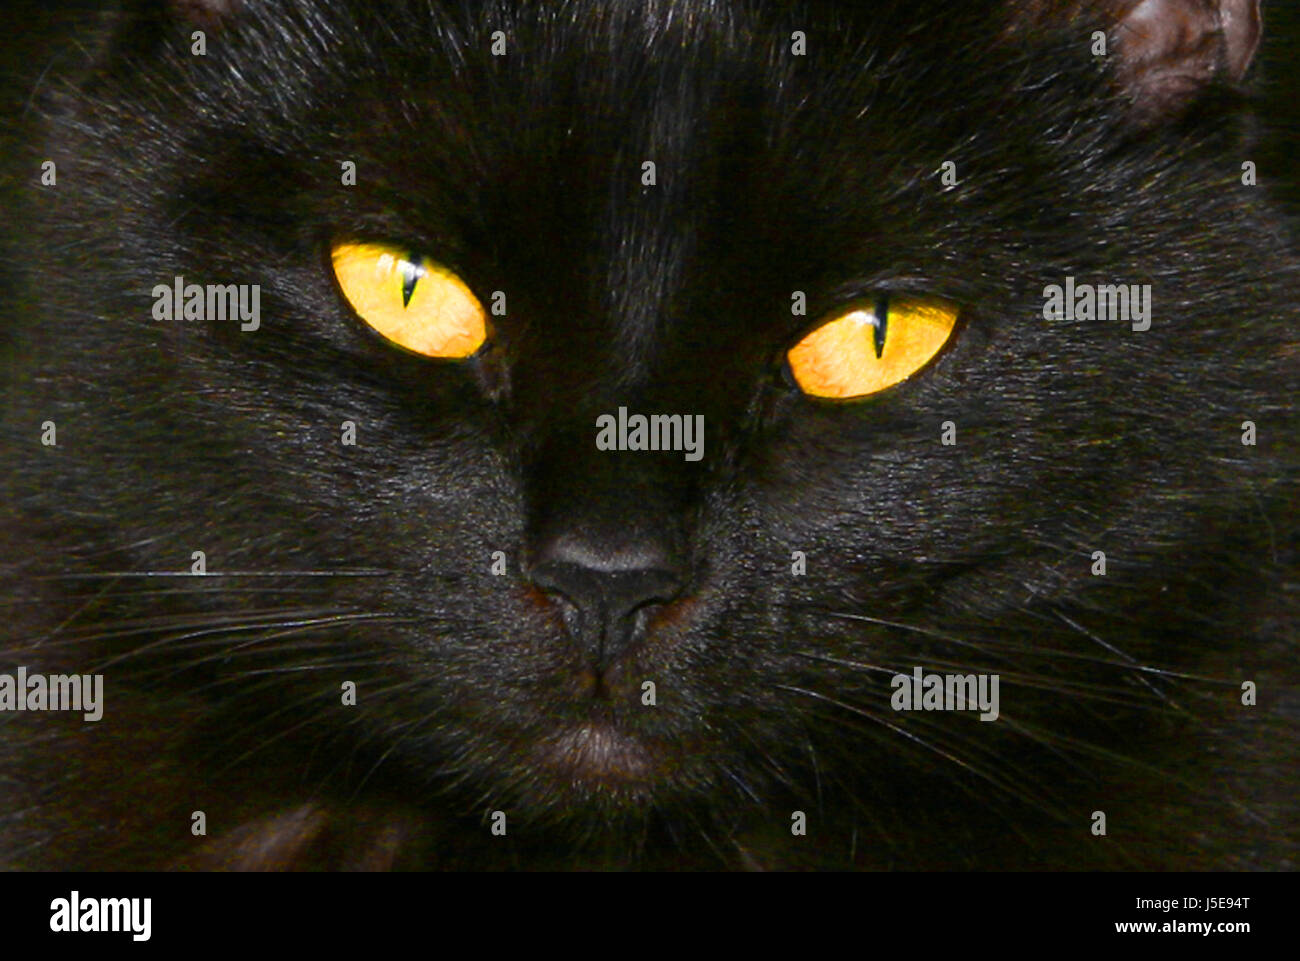 pet black swarthy jetblack deep black eyes cat eyes pussycat cat domestic cat Stock Photo